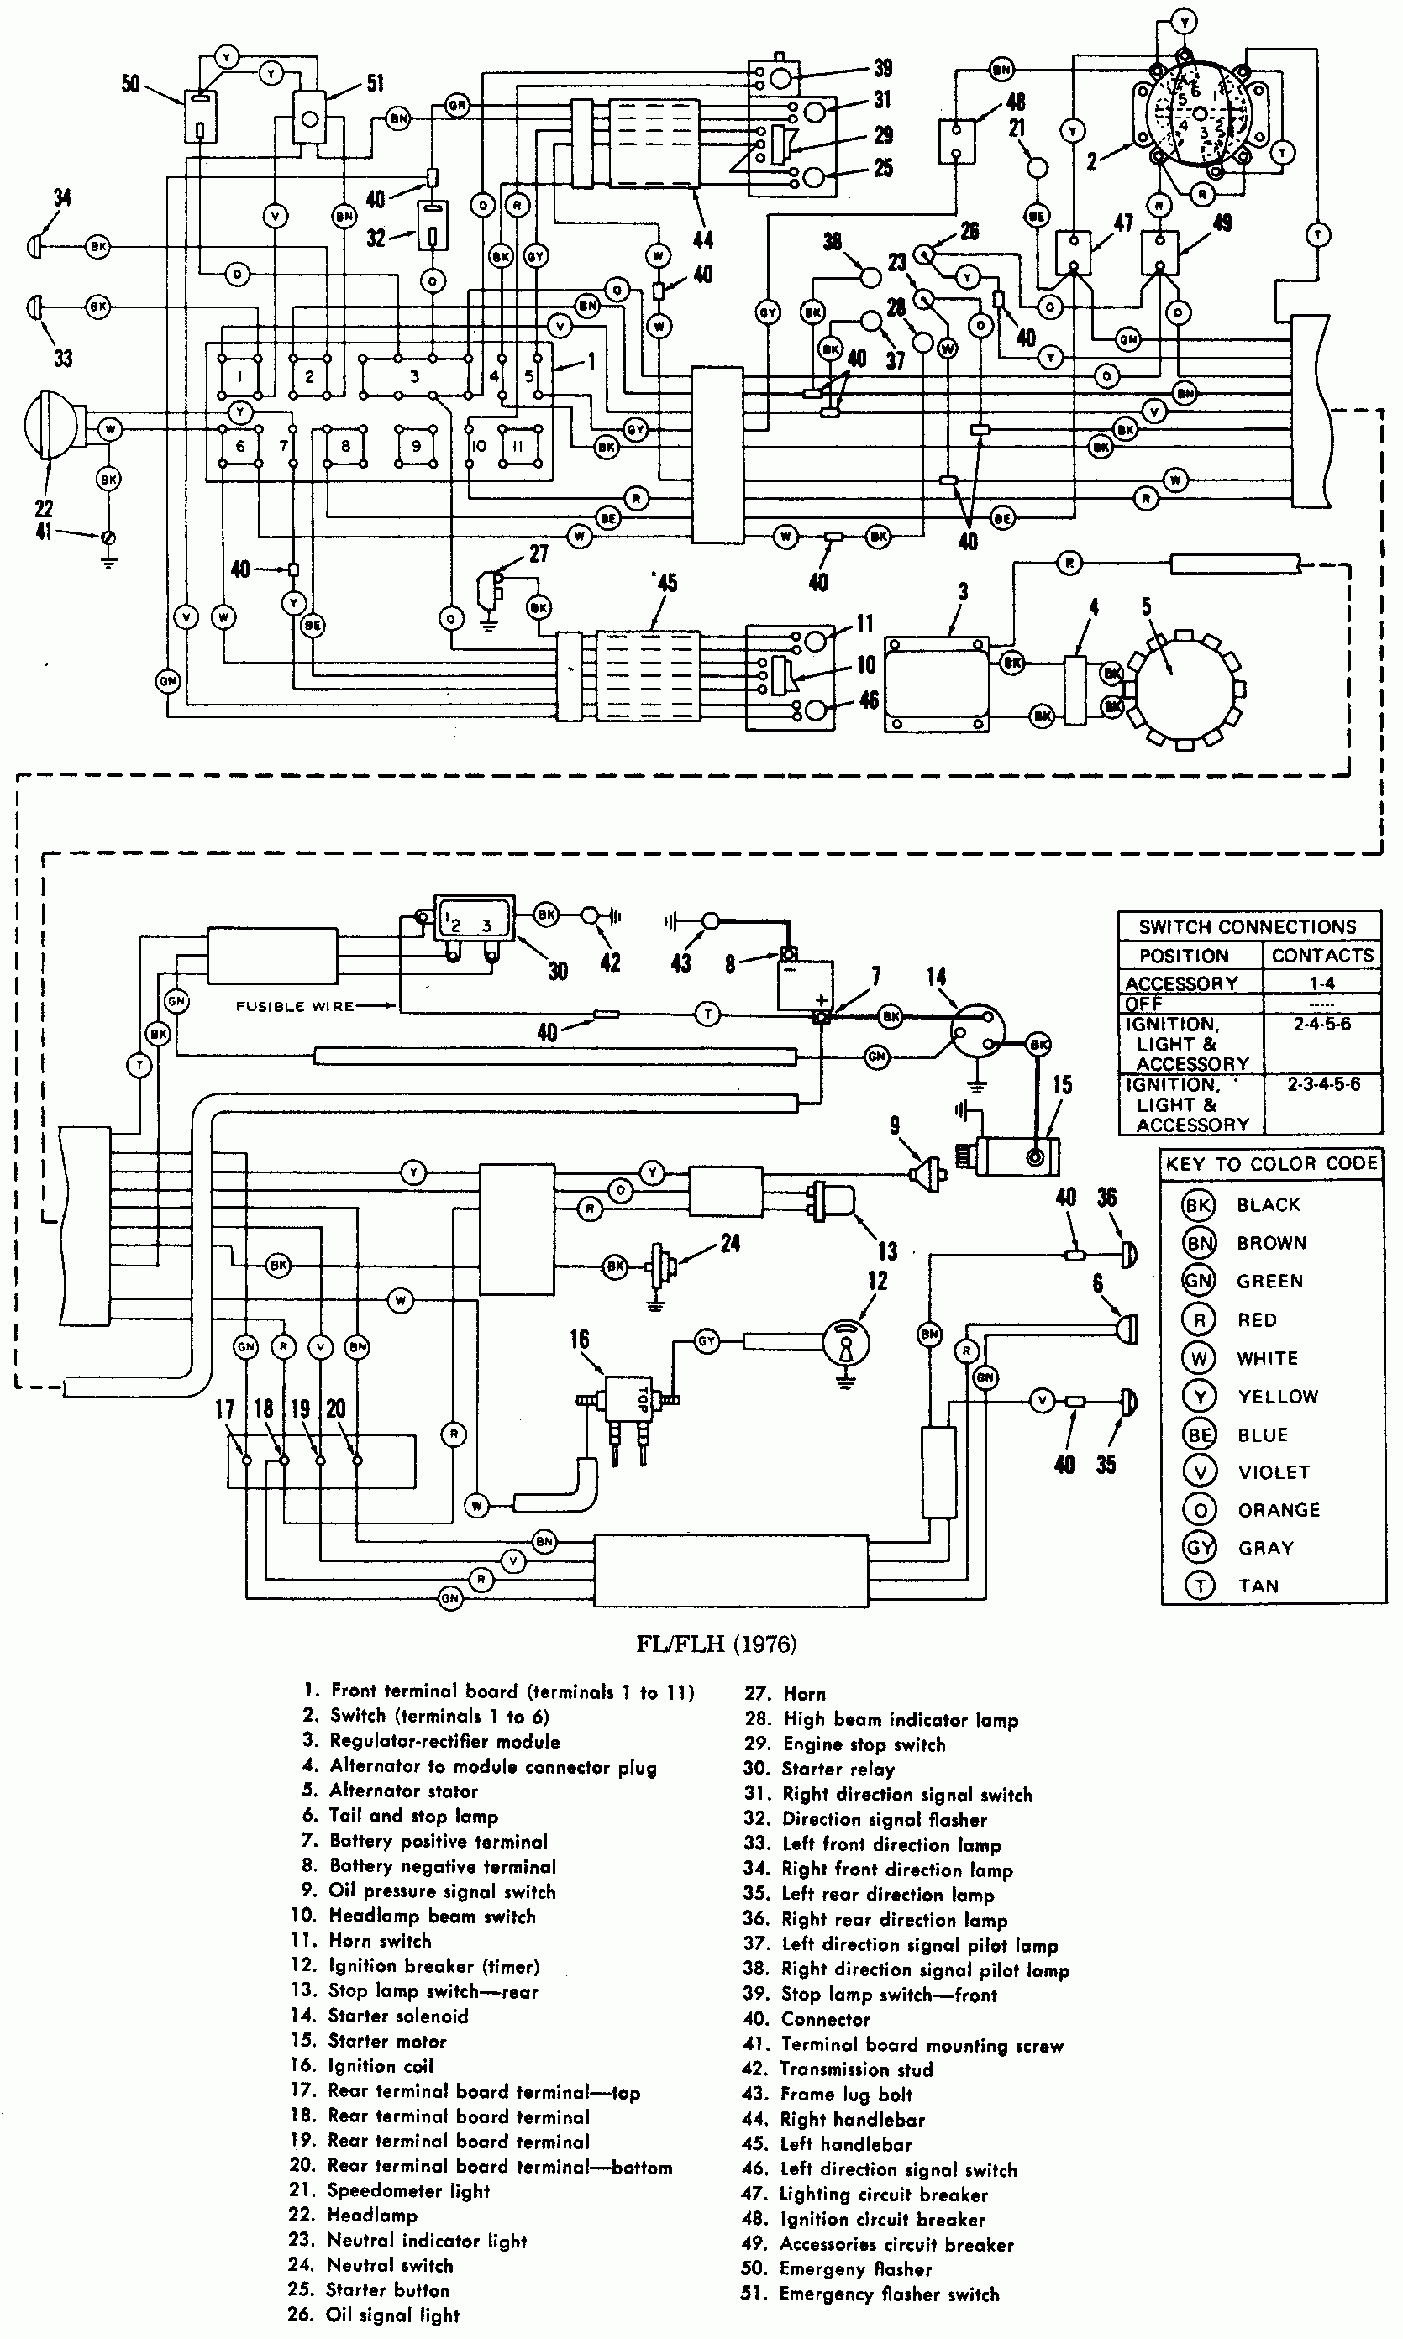 Harley Davidson Softail Slim Wiring Diagram | Wiring Library - Wiring Diagram For Harley Davidson Softail